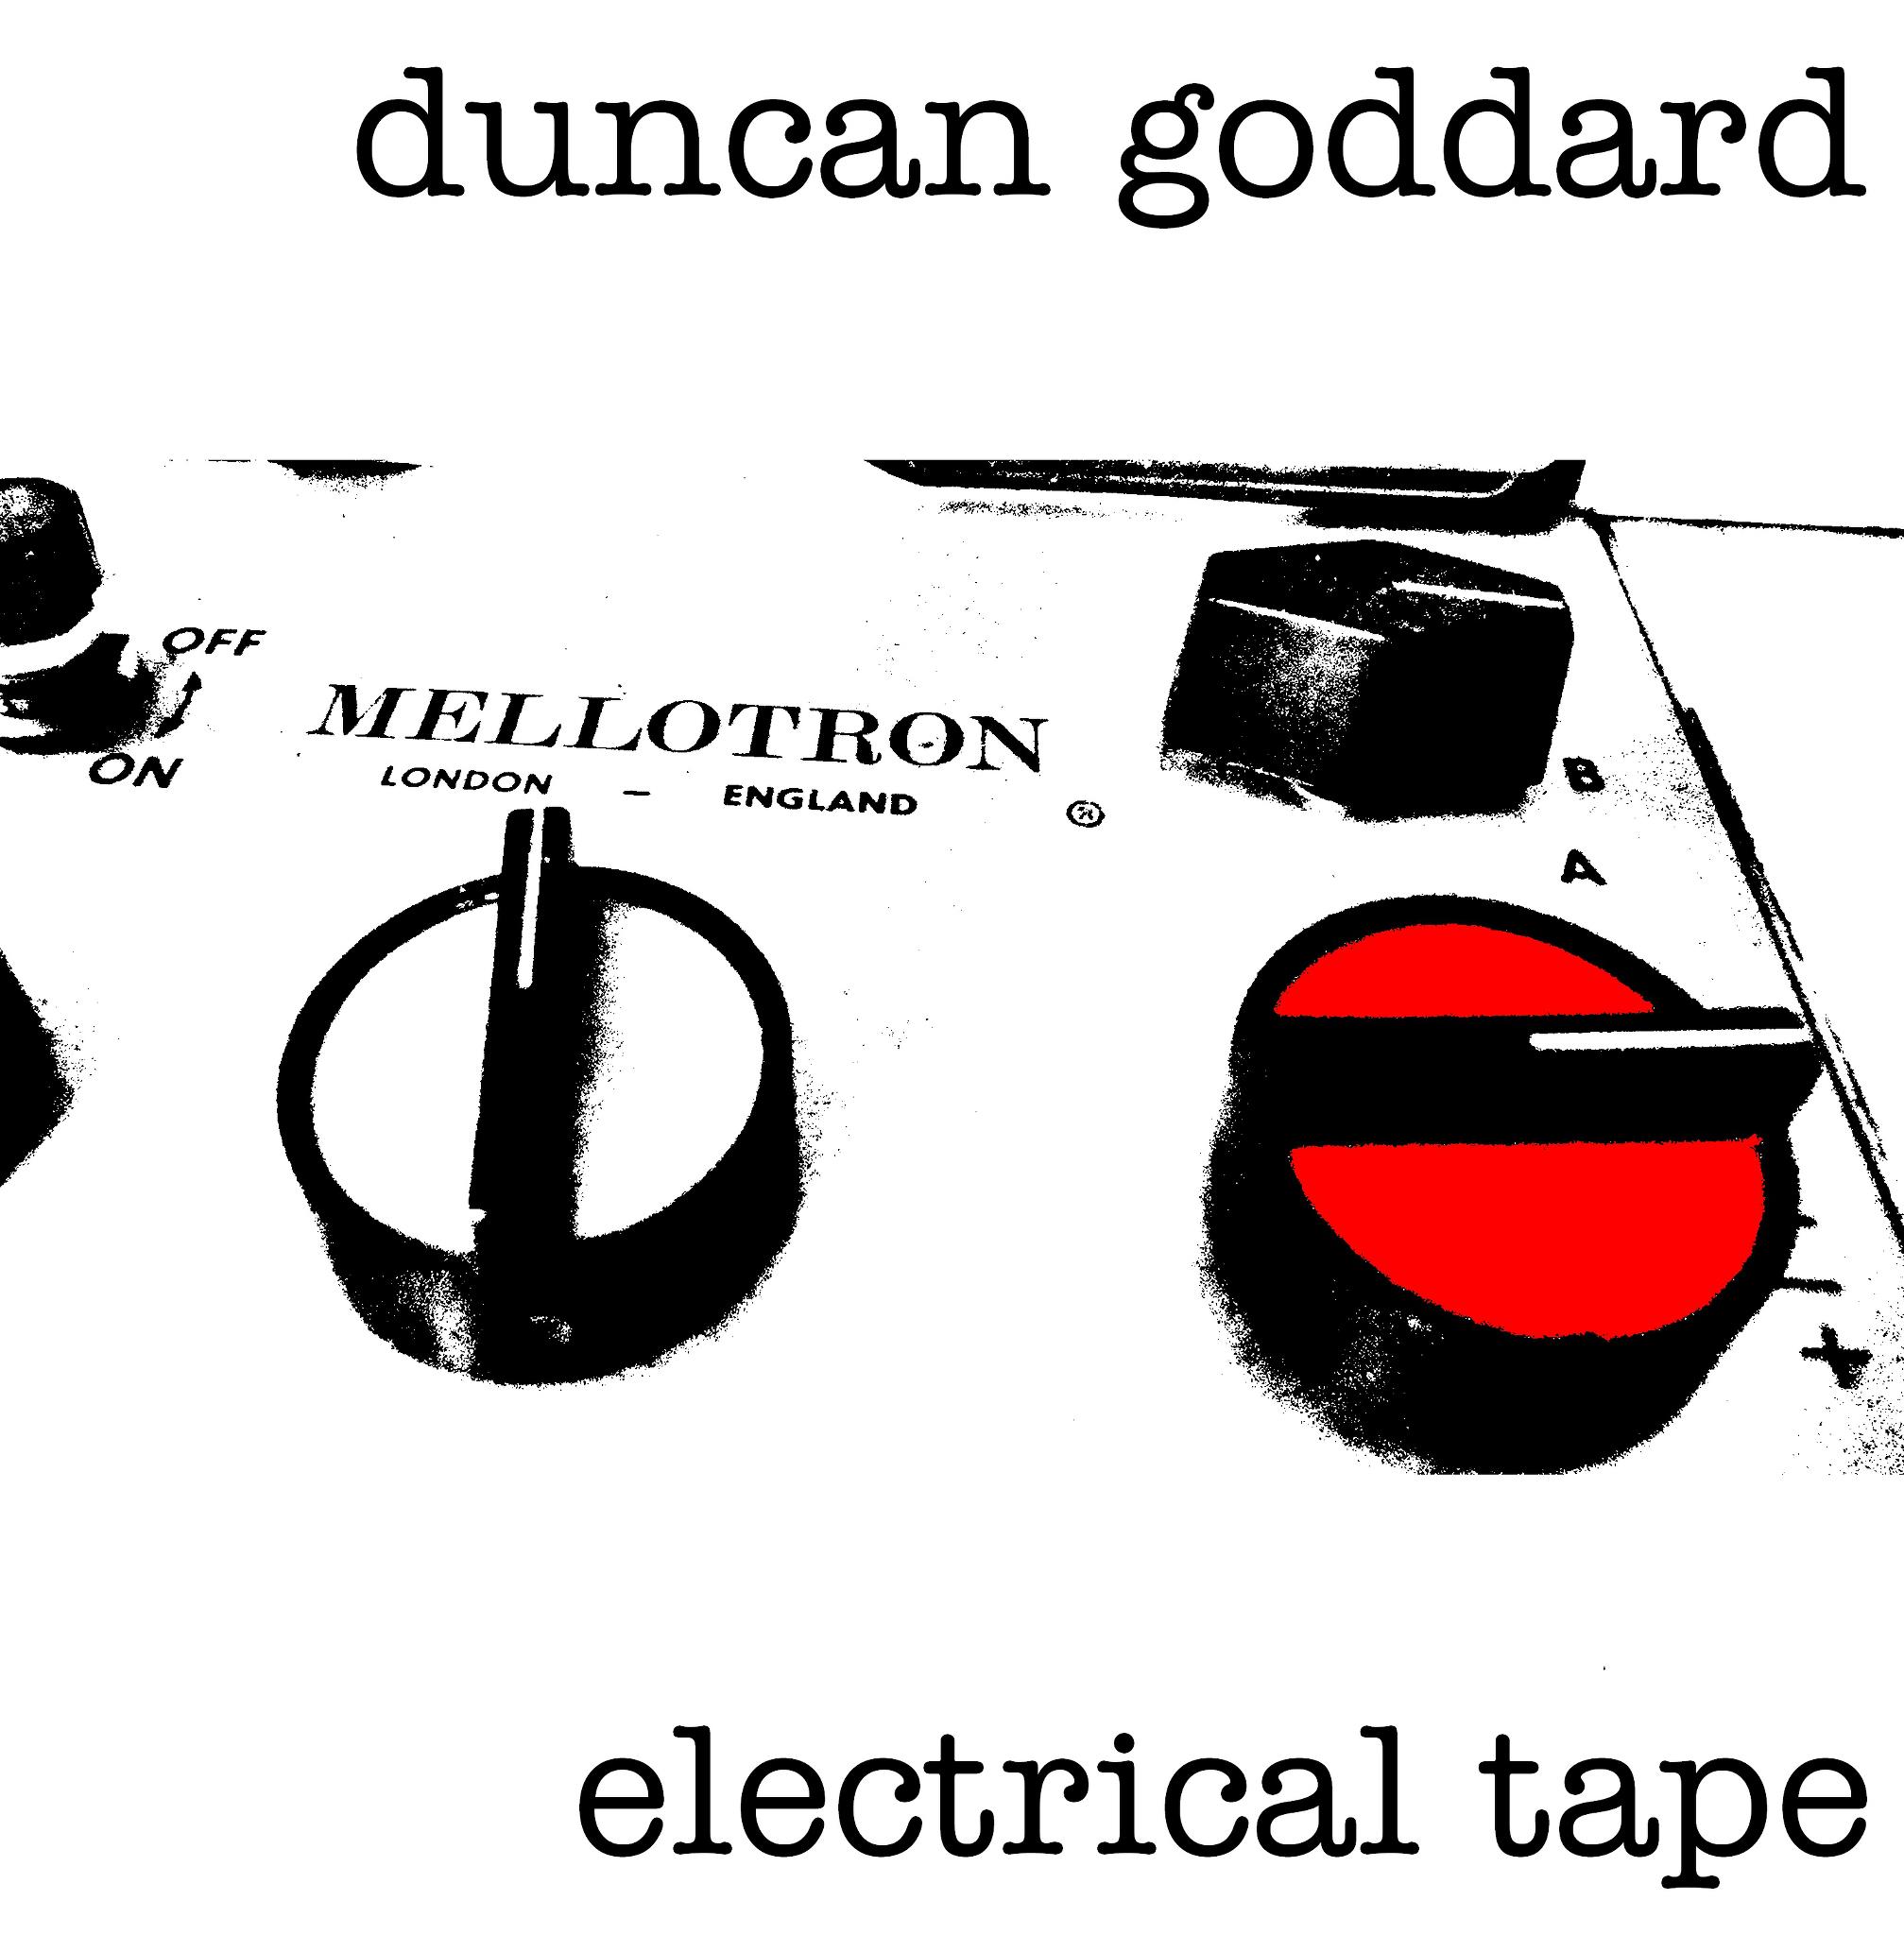 duncan goddard : electrical tape